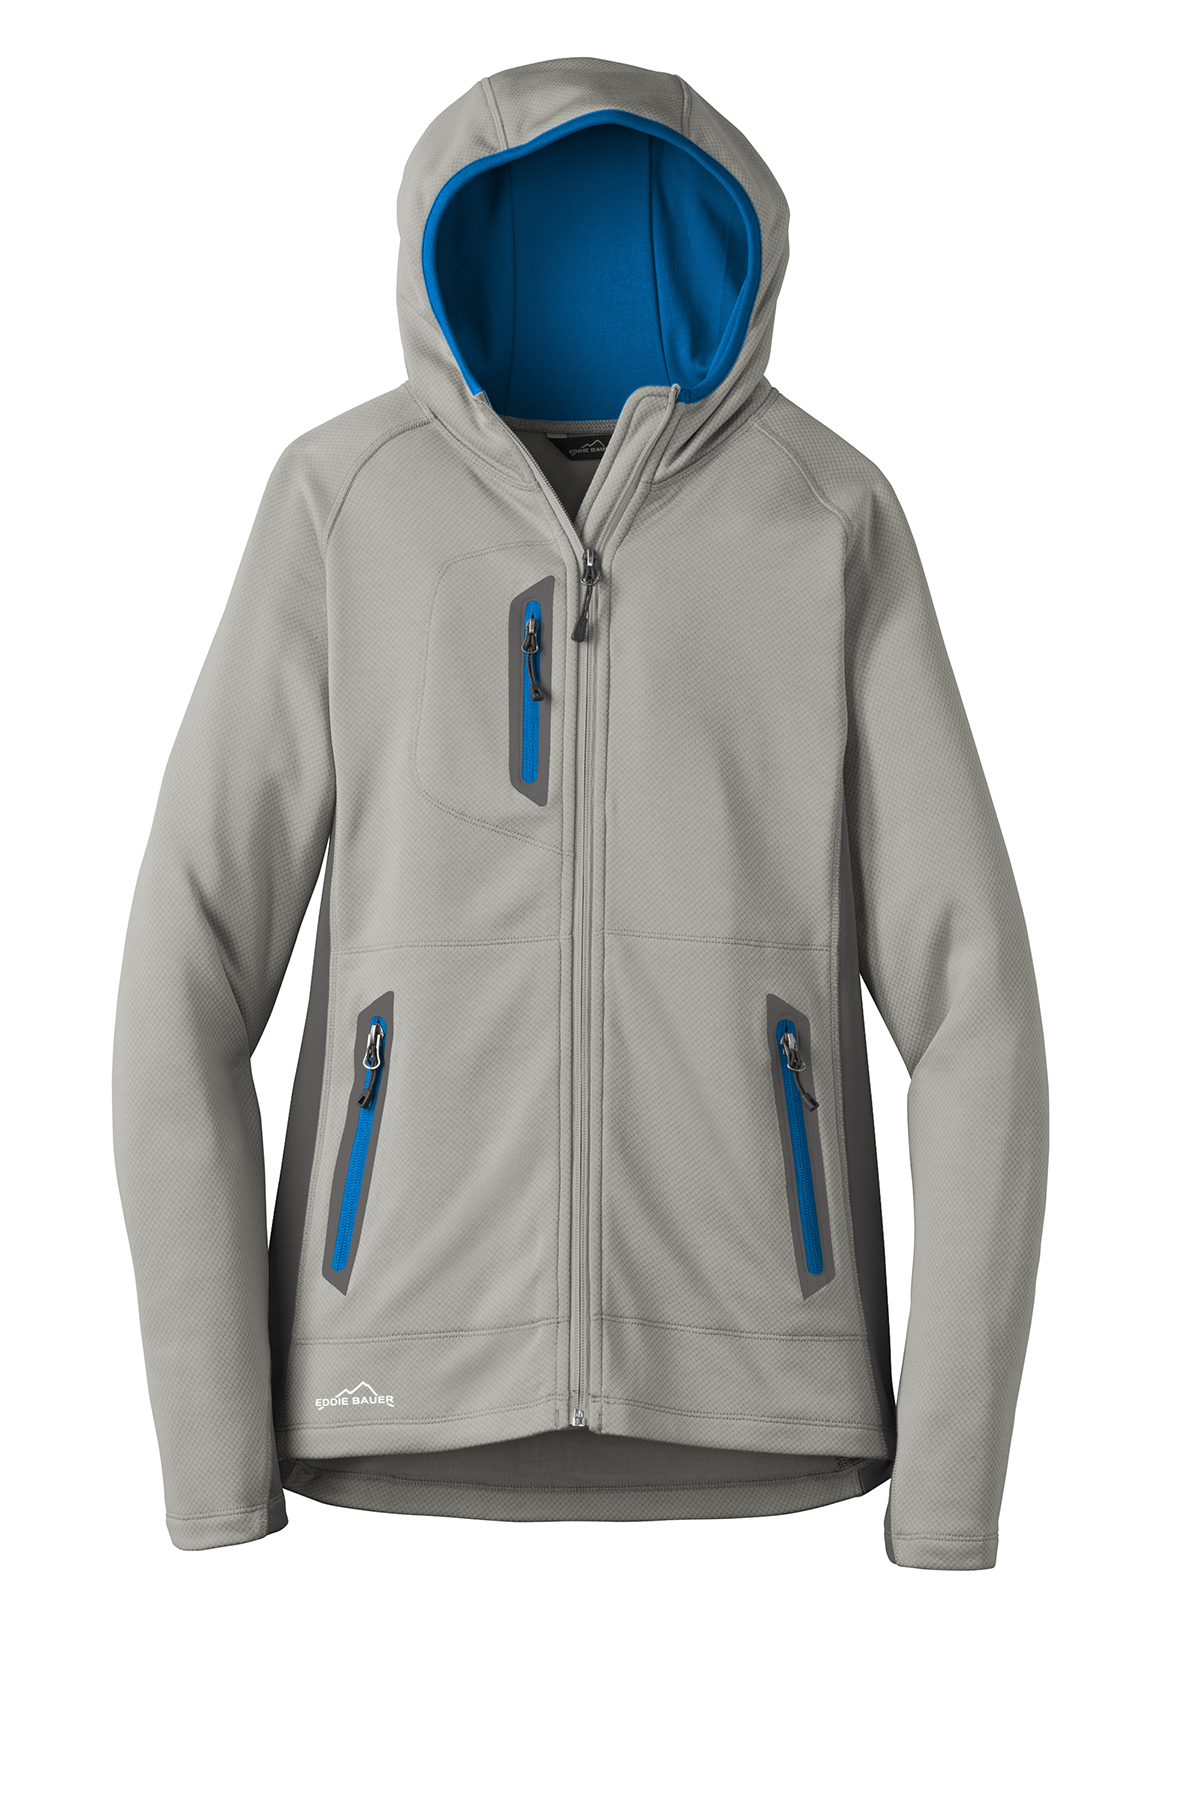 NWT Eddie Bauer XL Full Zip Fleece Jacket - clothing & accessories - by  owner - apparel sale - craigslist